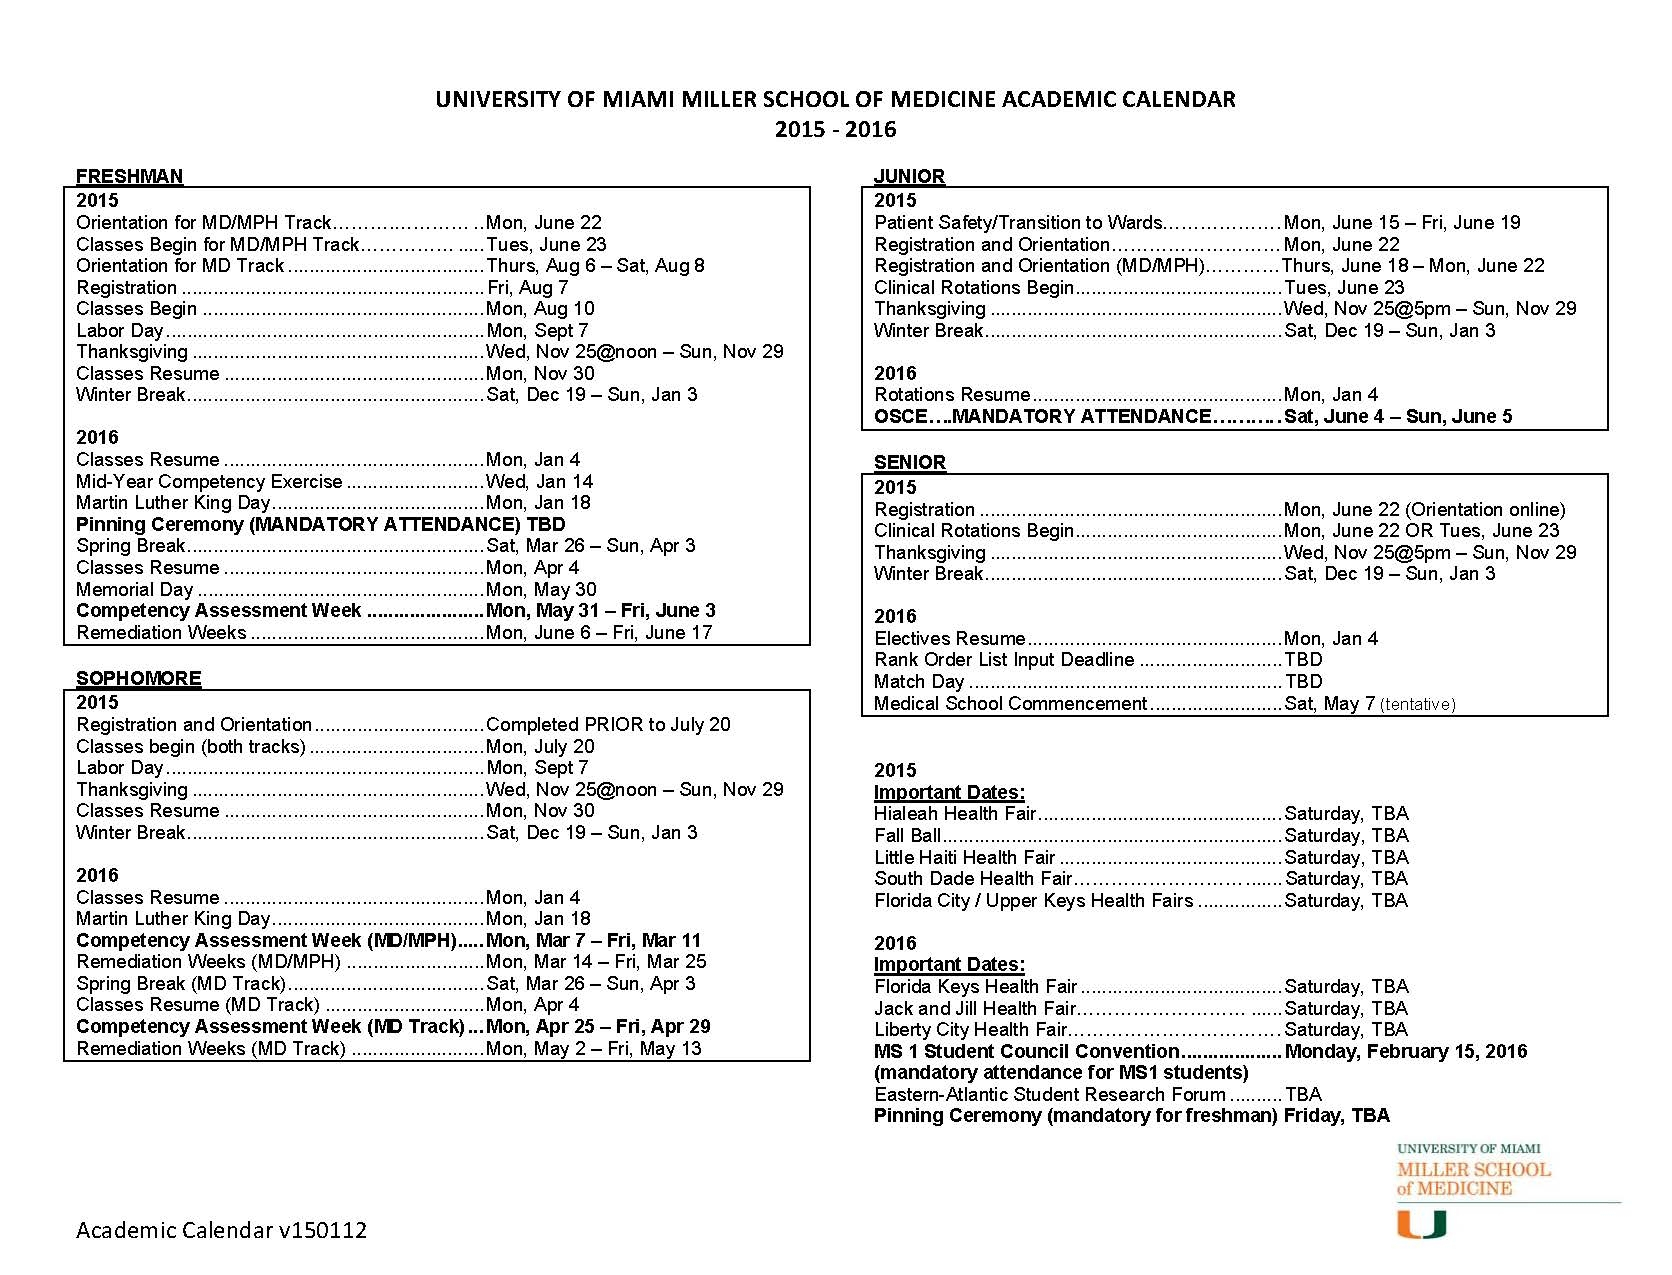 Miami University Academic Calendar Qualads Universitycalendars net